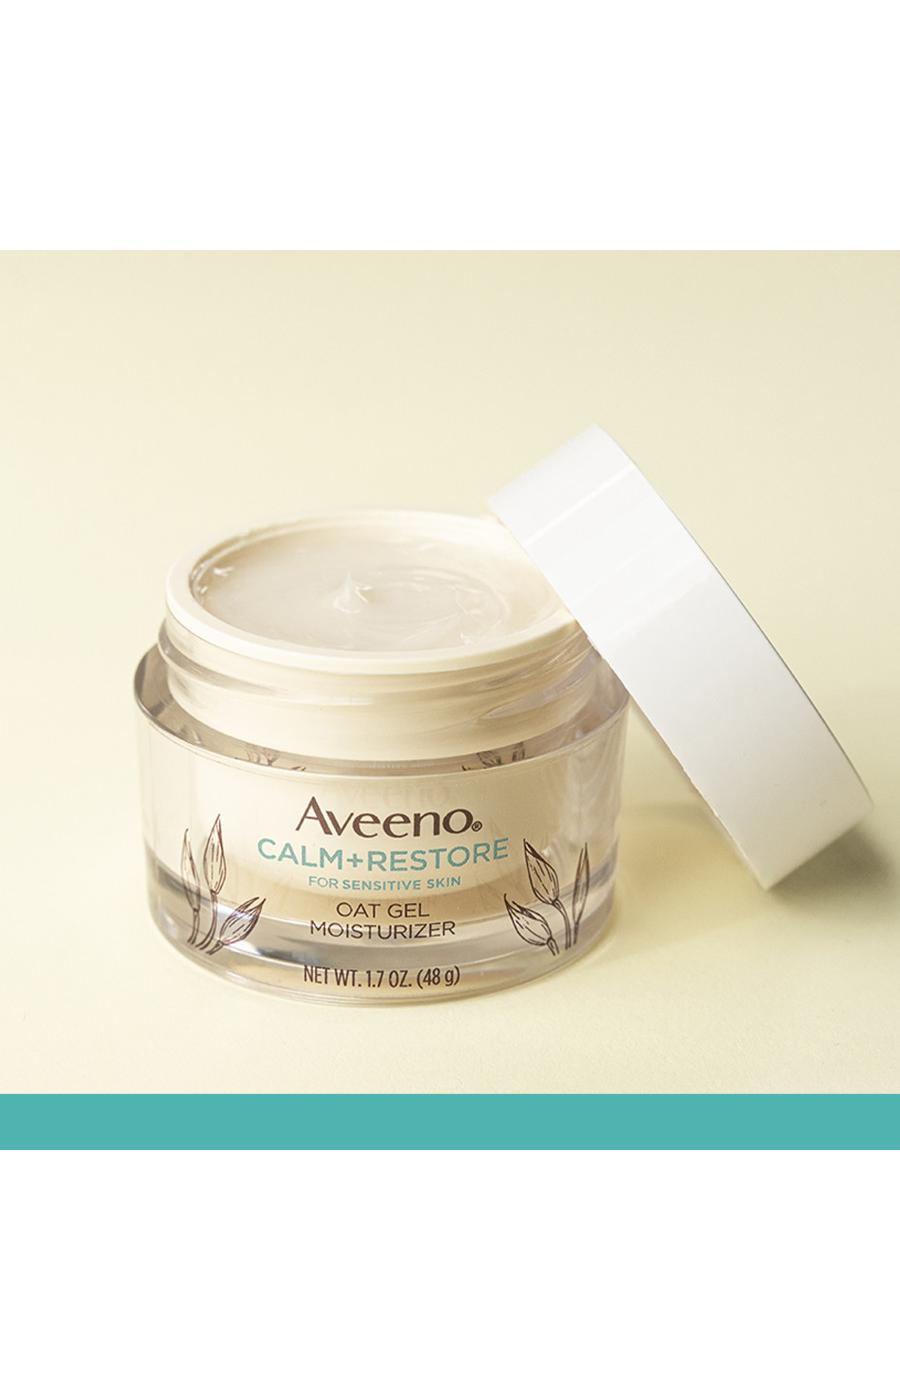 Aveeno Calm + Restore Oat Gel Face Moisturizer, For Sensitive Skin; image 4 of 7